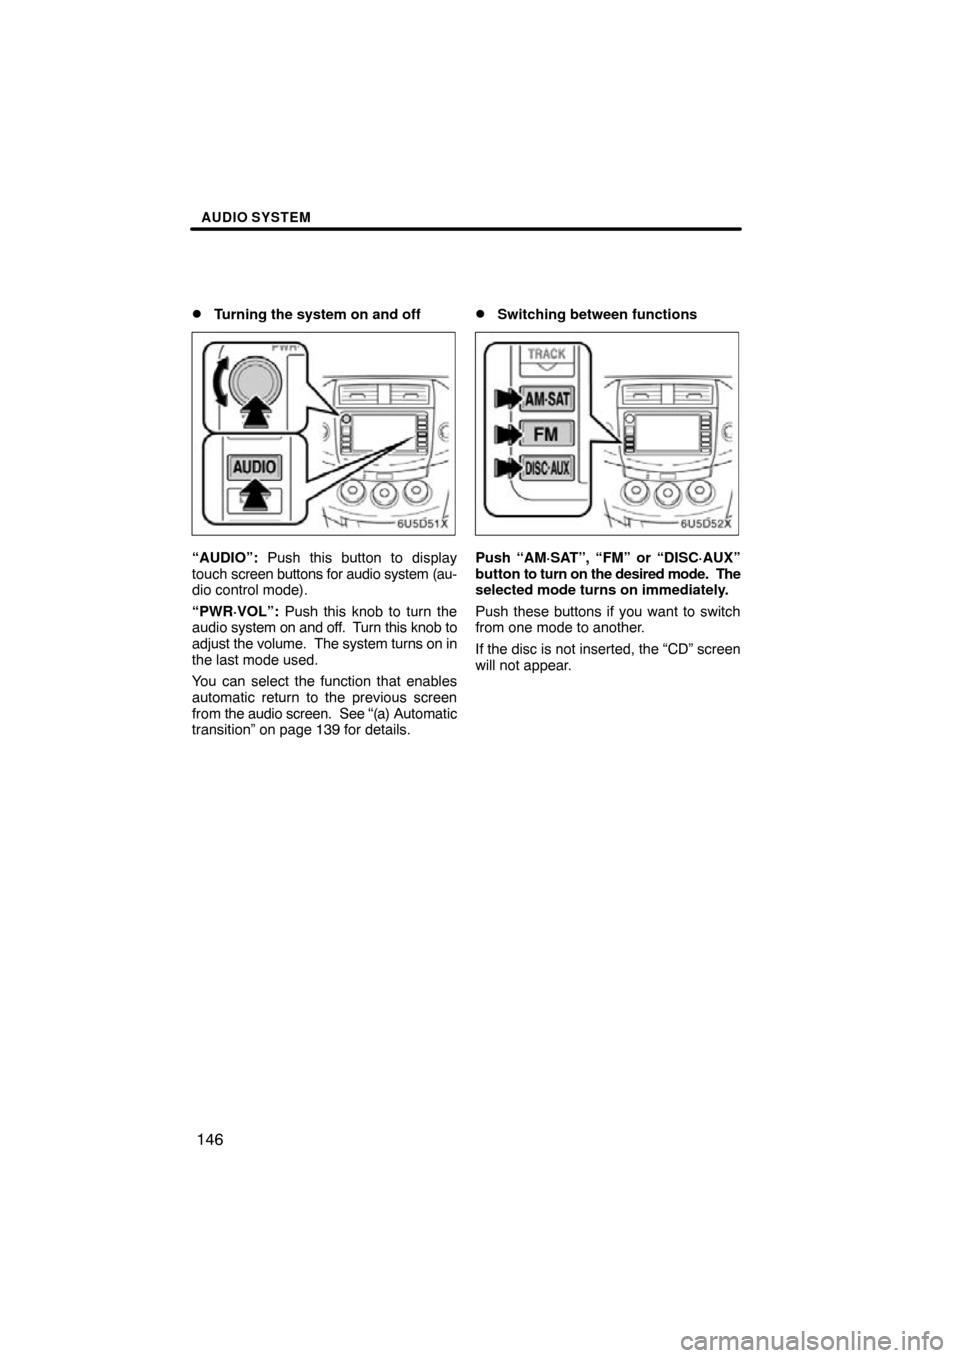 TOYOTA RAV4 2009 XA30 / 3.G Navigation Manual AUDIO SYSTEM
146

Turning the system on and off
“AUDIO”: 
Push this button to display
touch  screen buttons for audio system (au-
dio control mode).
“PWR·VOL”:  Push this knob to turn the
au